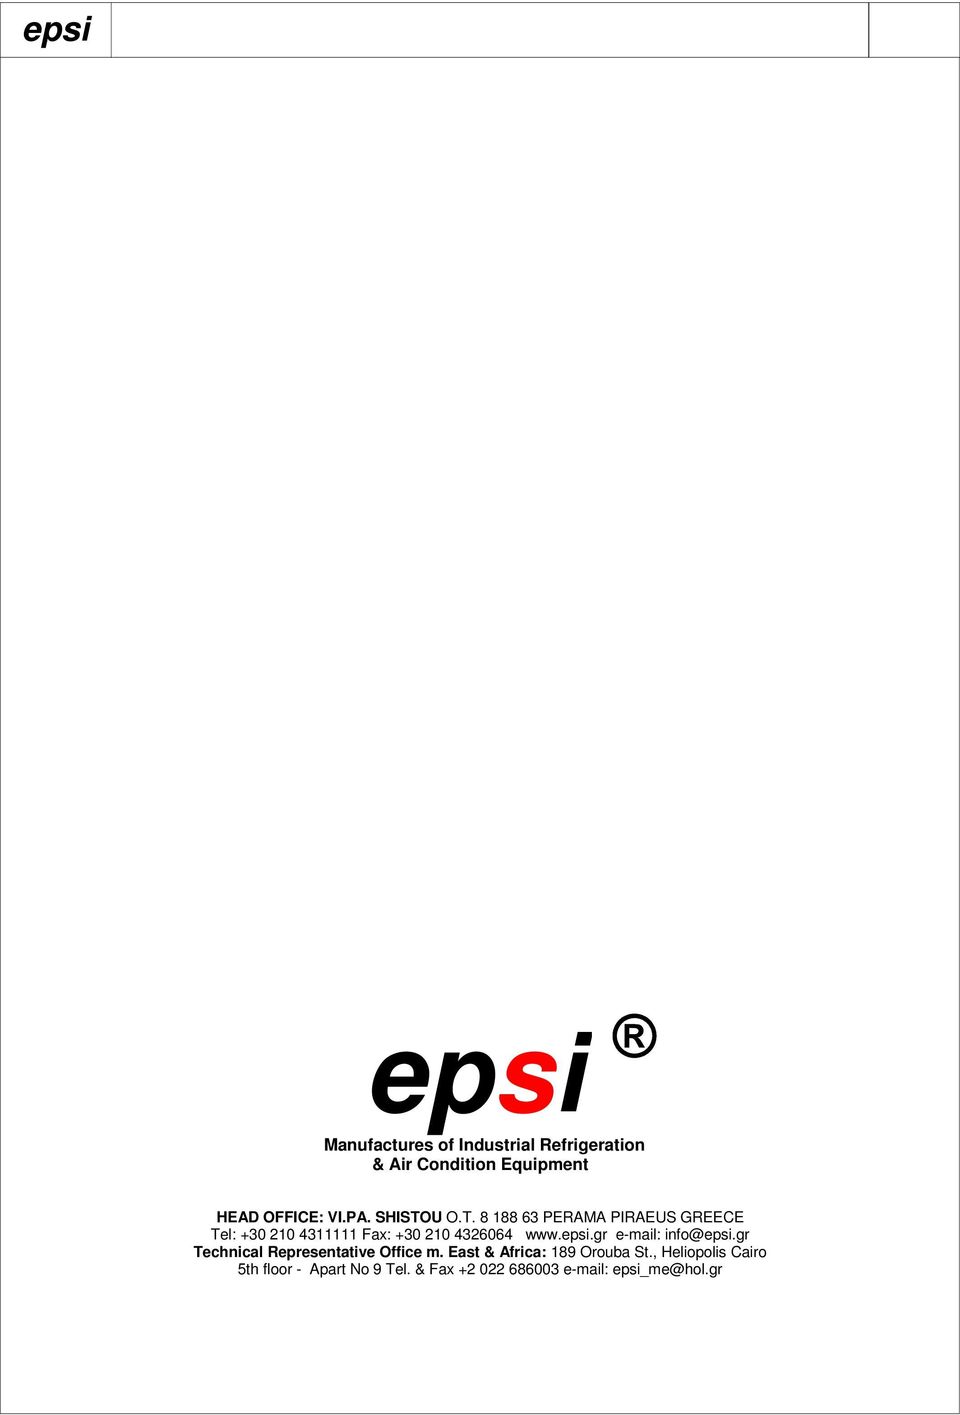 epsi.gr e-mail: info@epsi.gr Technical Representative Office m.